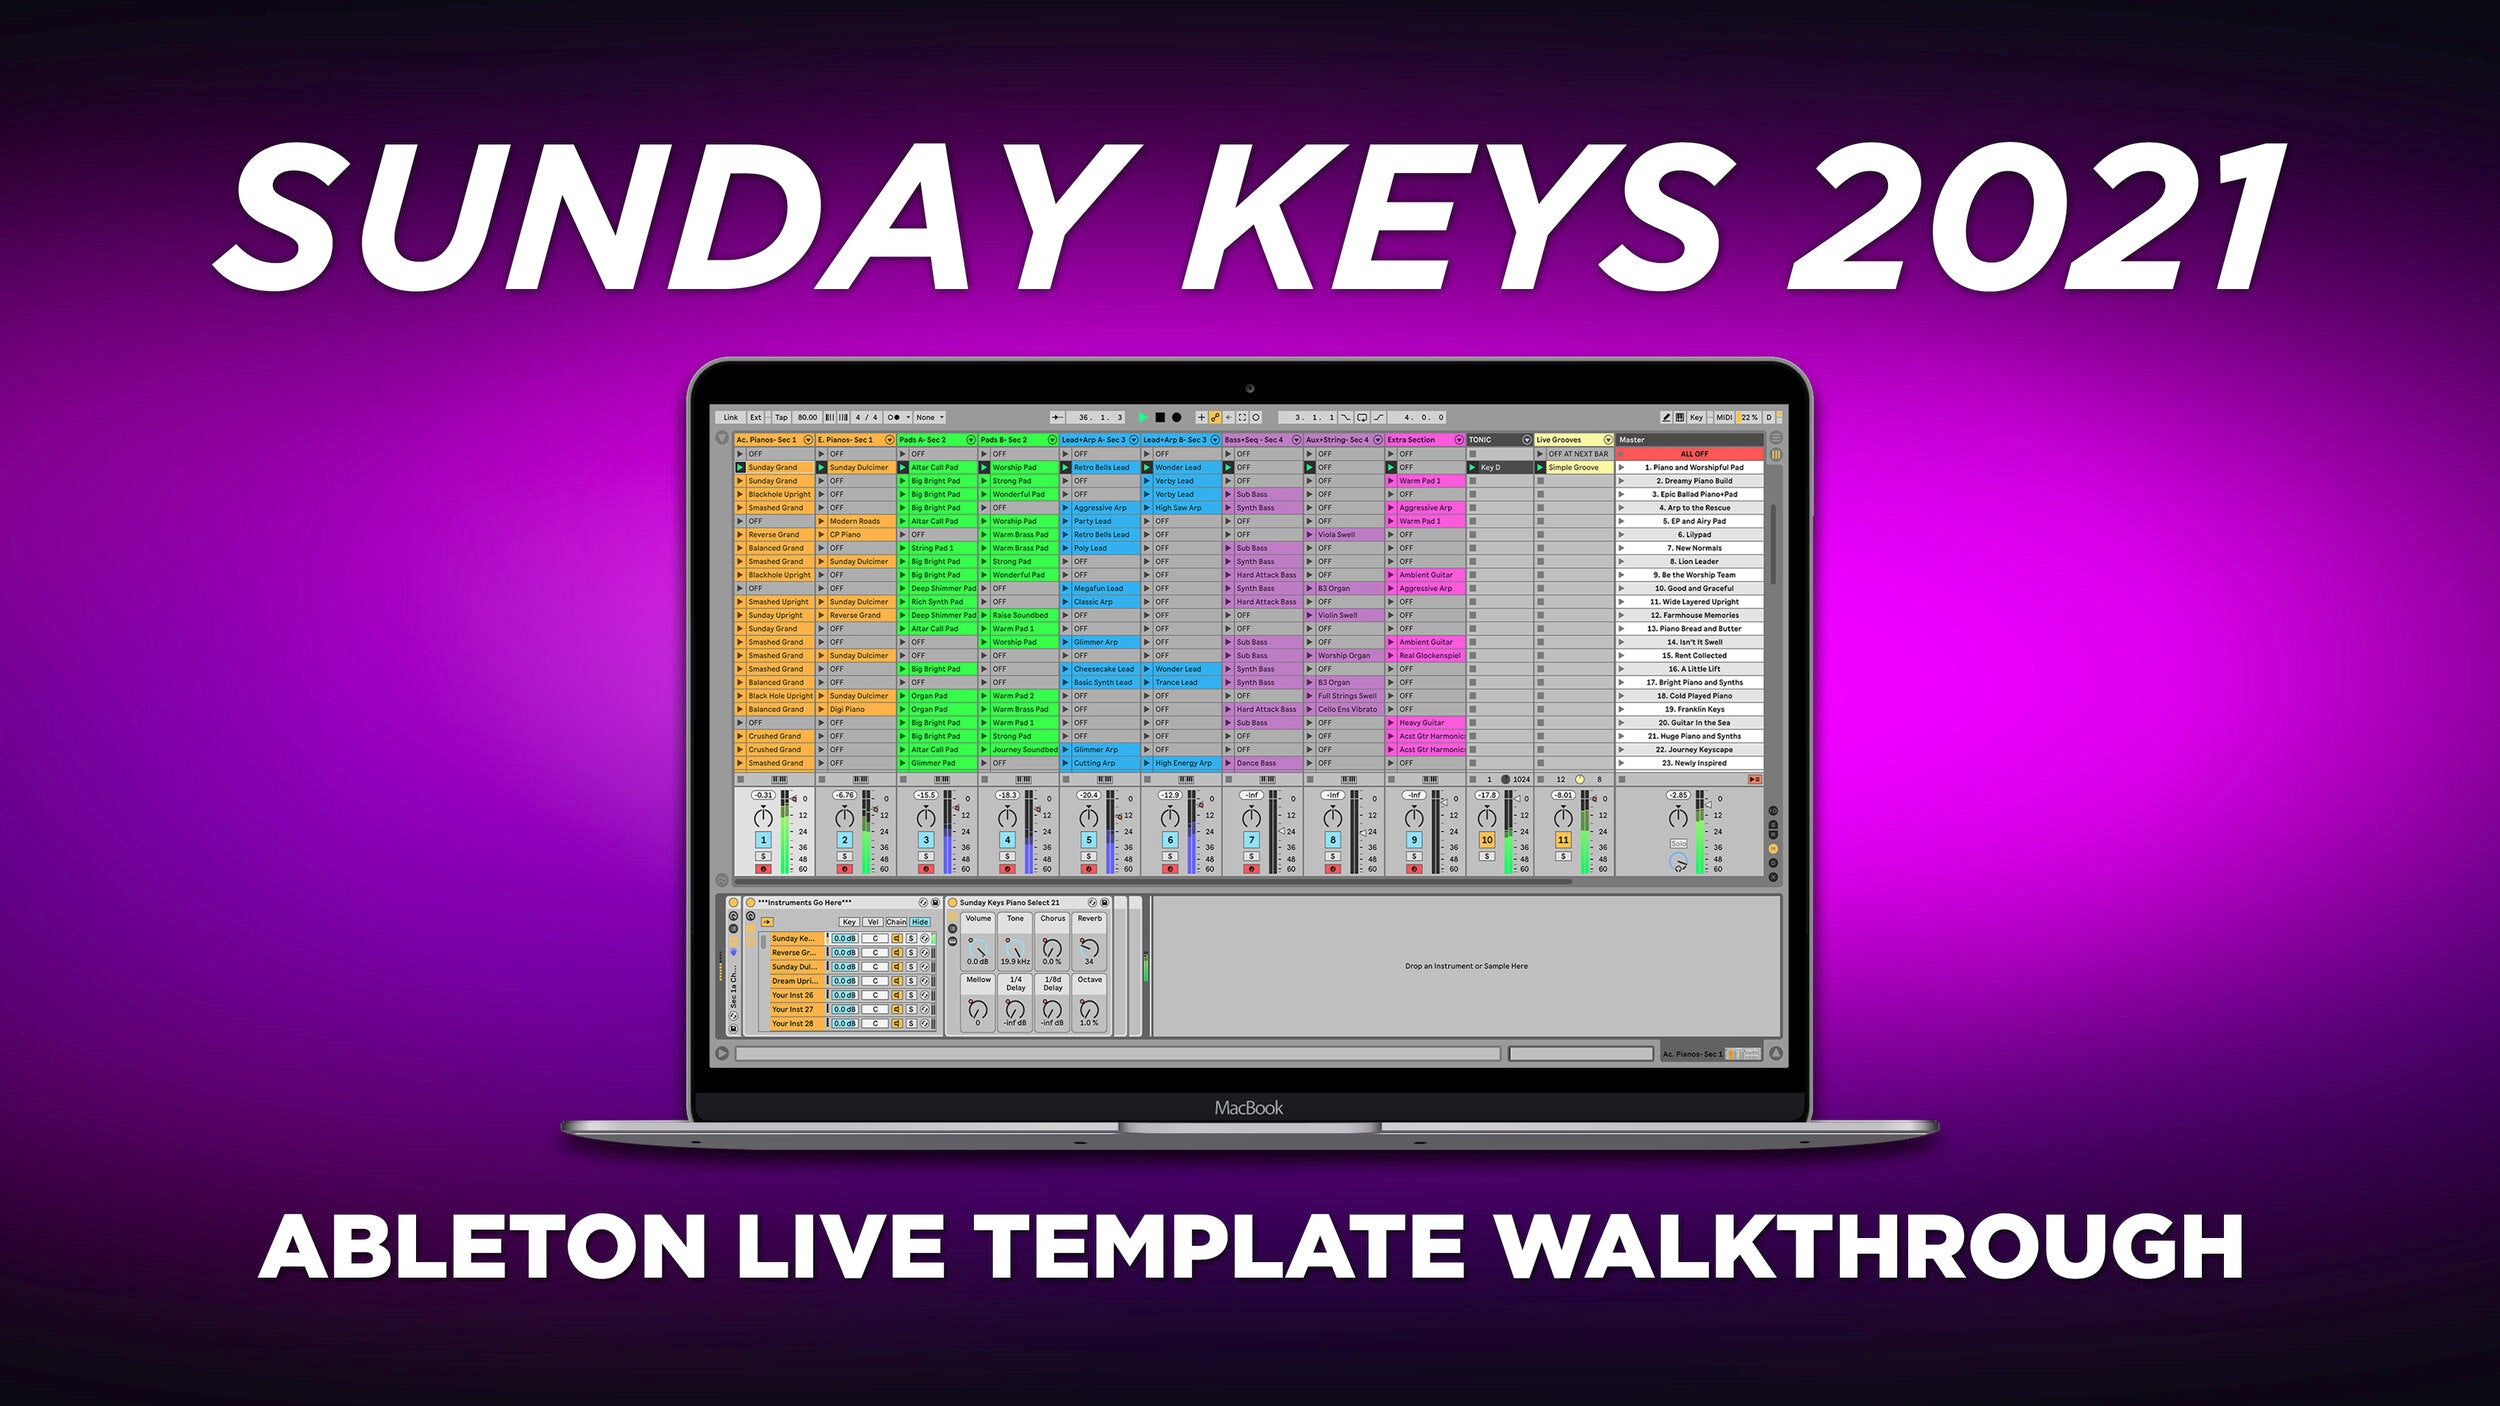 Introducing Sunday Keys 2021 for Ableton